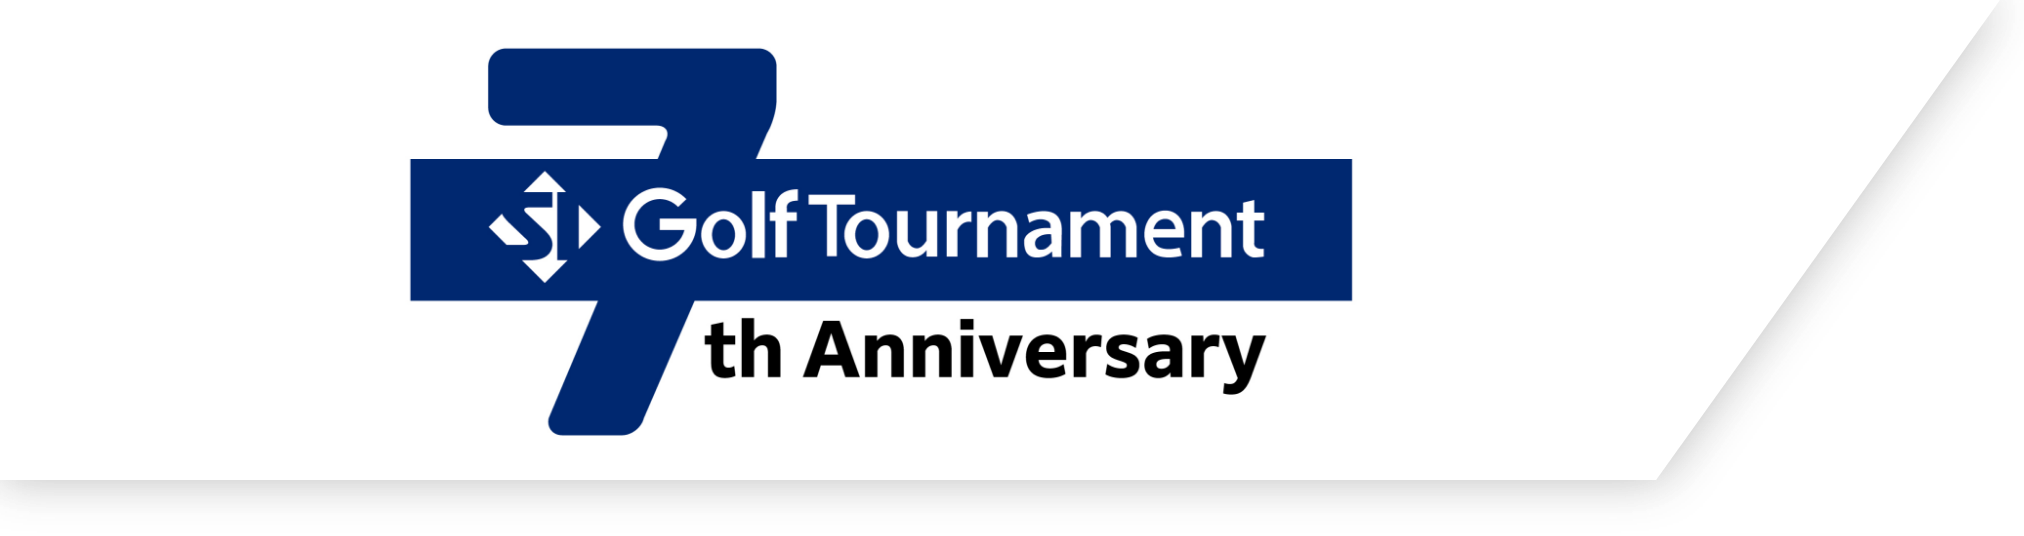 Golf_Tournament